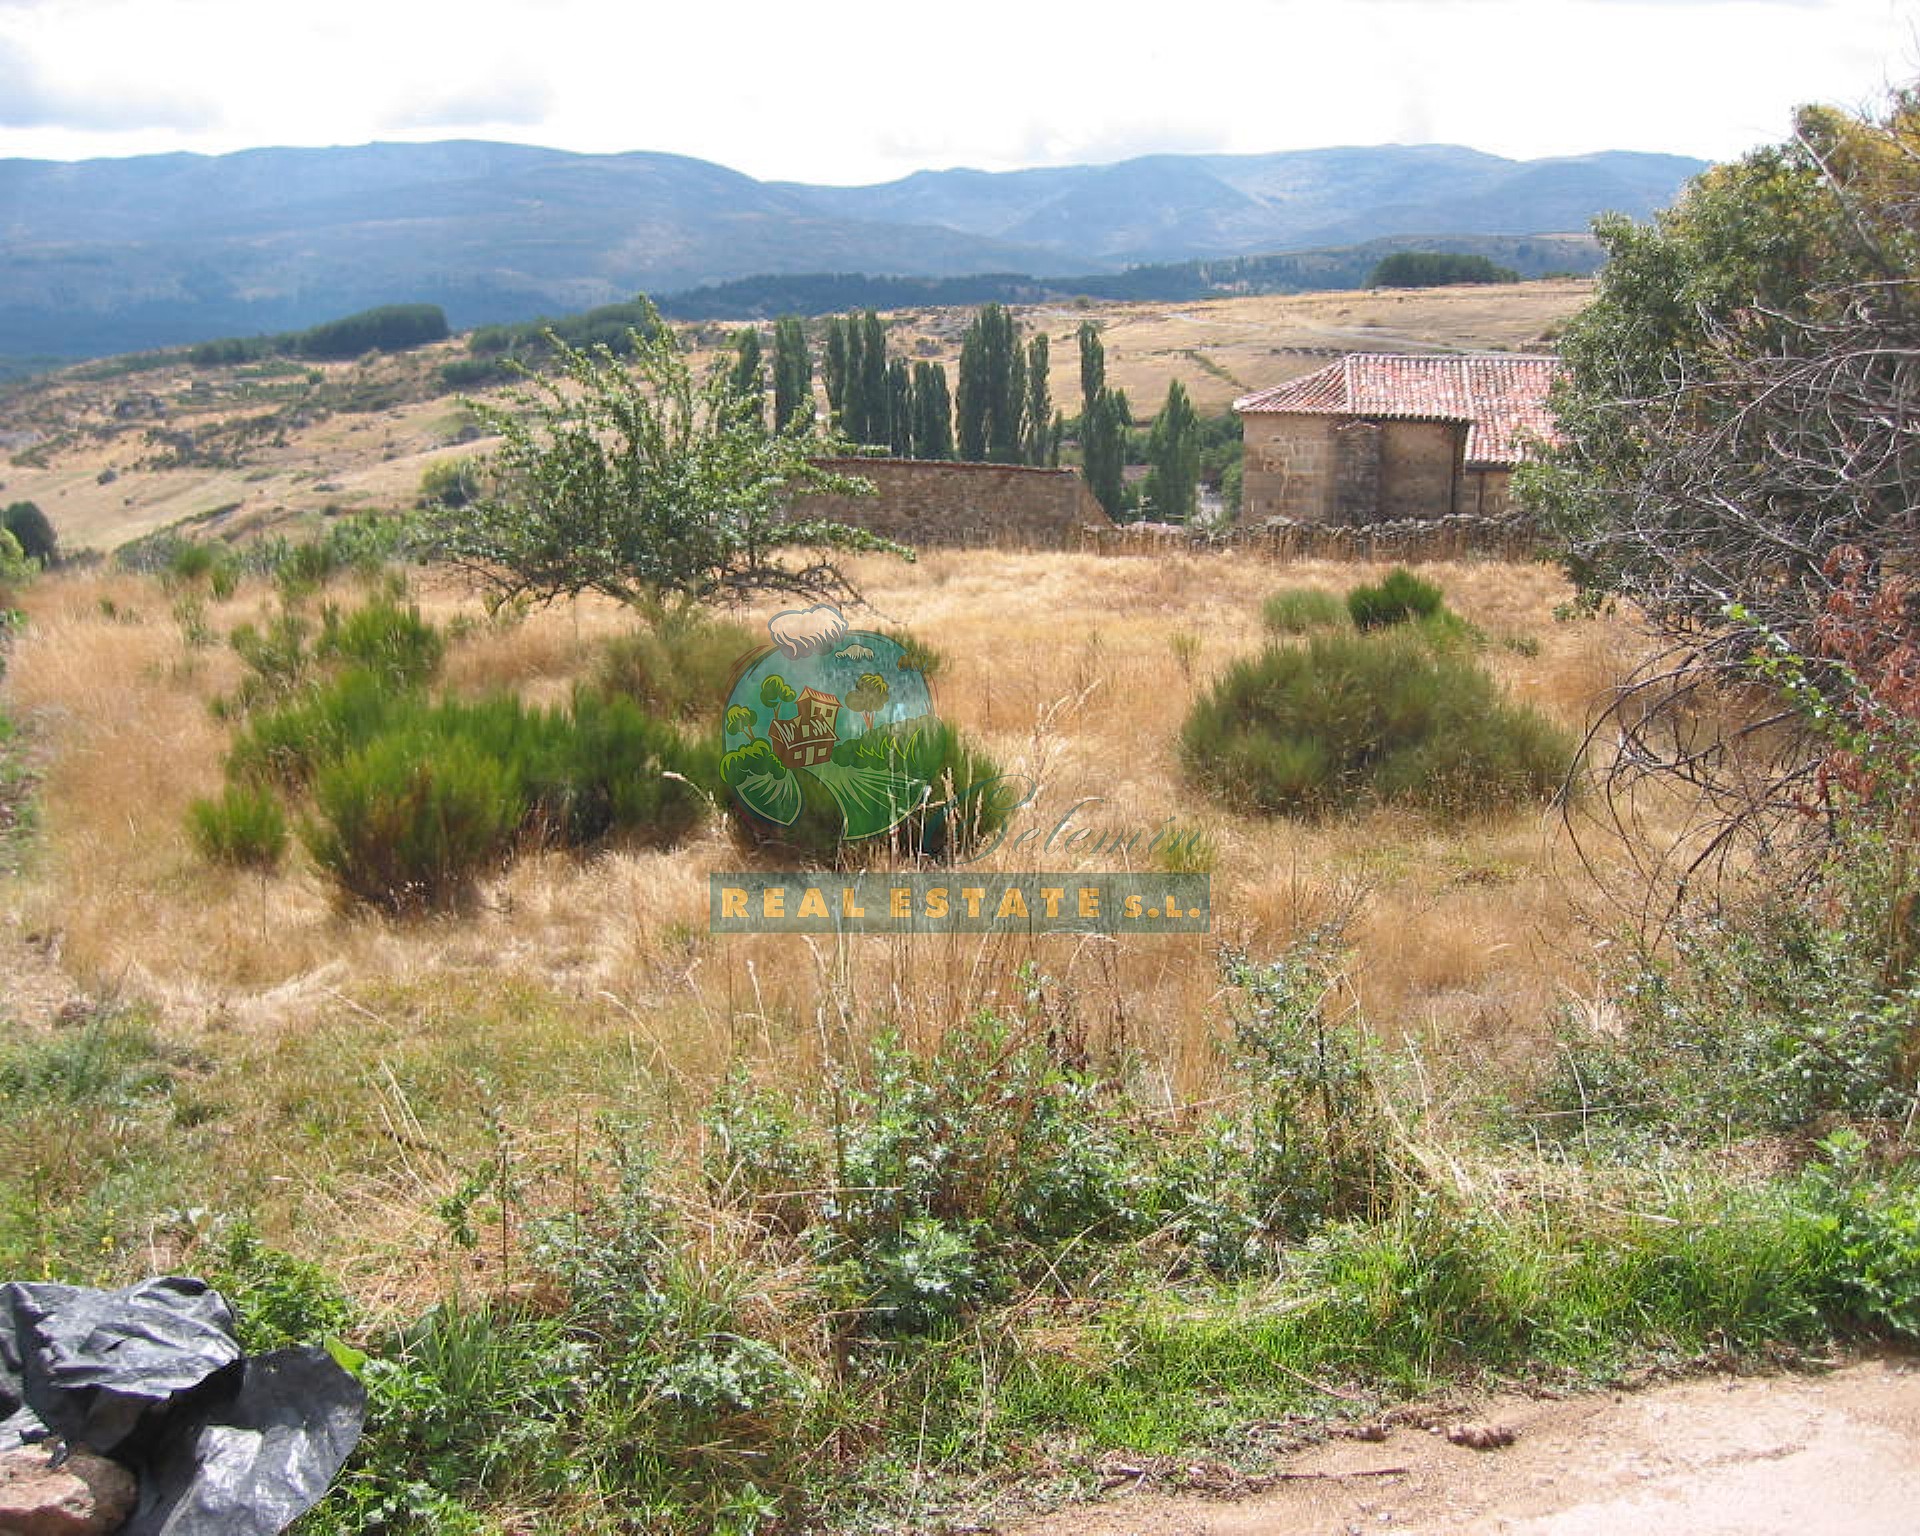 En Sierra de Gredos.